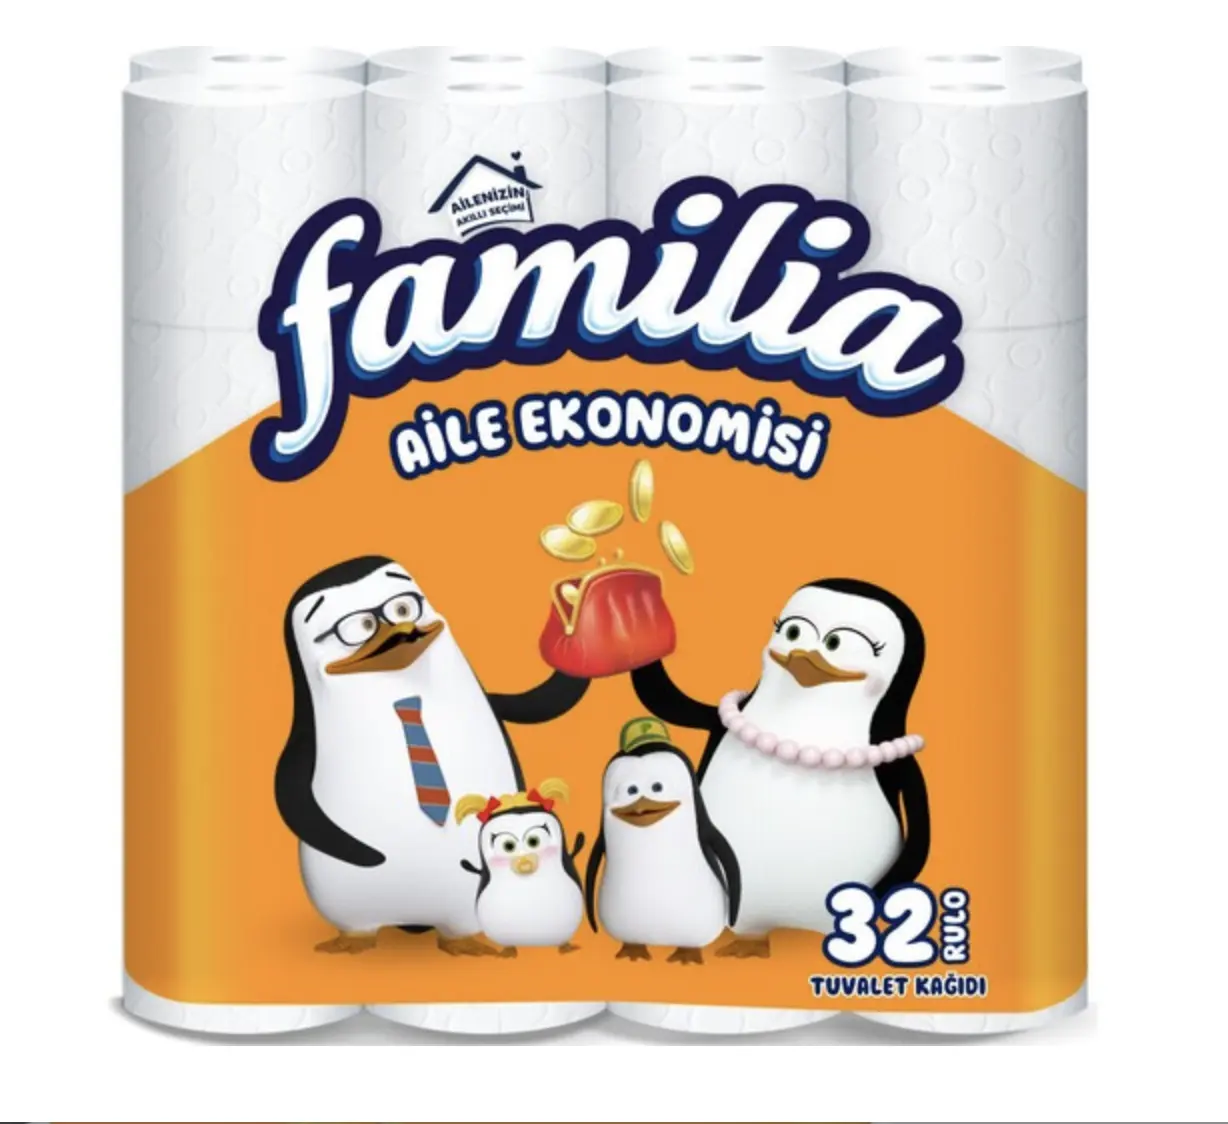 En iyi fiyat tuvalet kağıdı kağıt rulosu Familia tuvalet kağıdı ekonomik paket kutusu 32 toptan